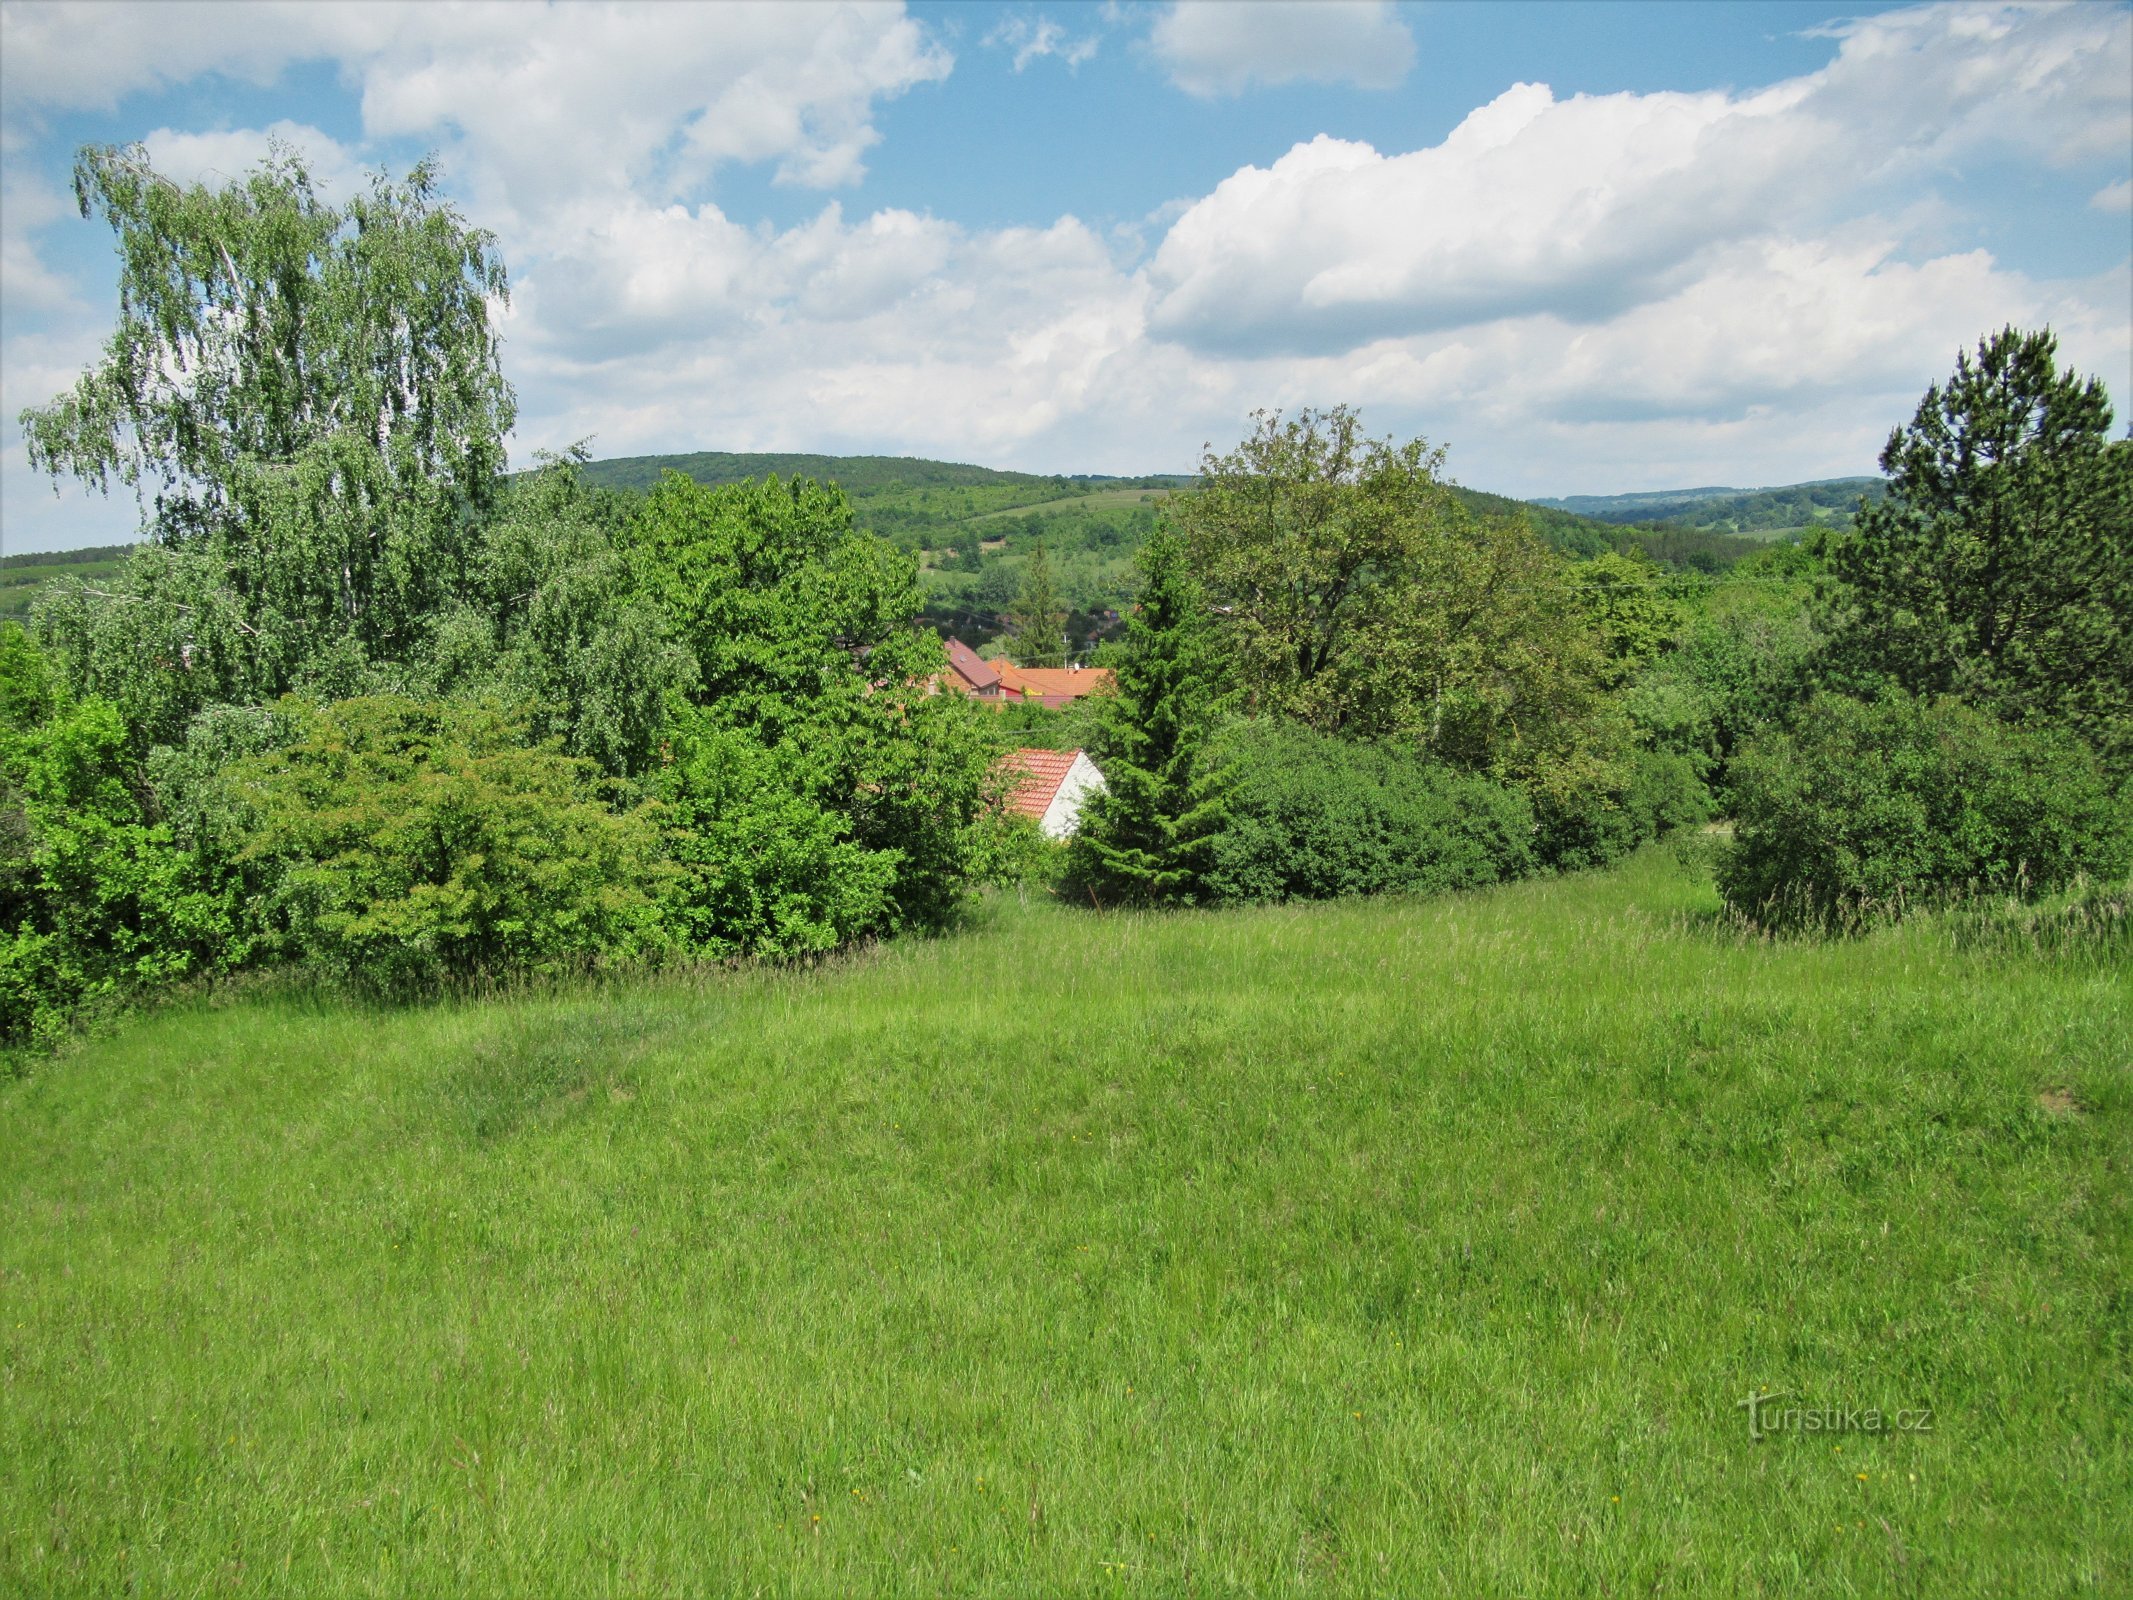 Pogled s travnika proti Javorniku